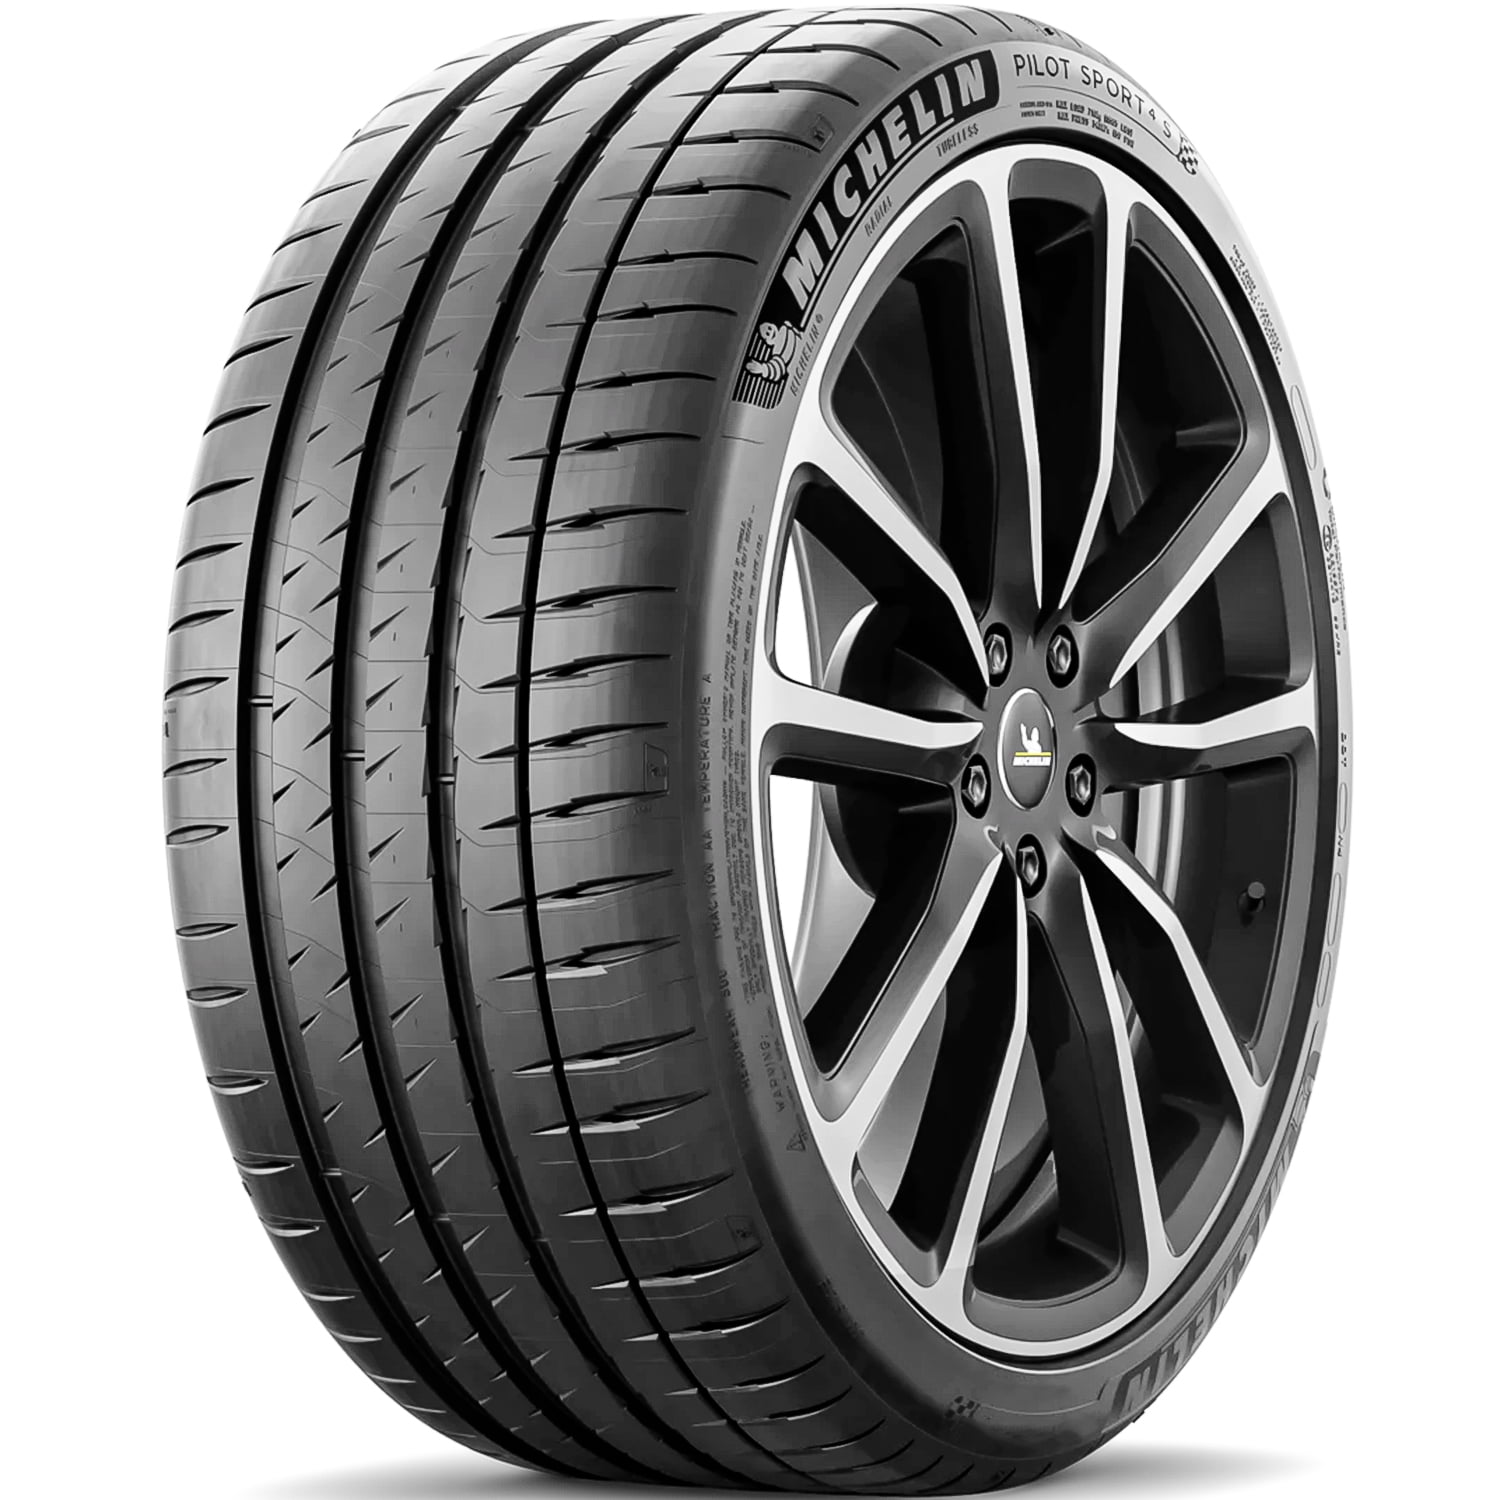 Michelin Pilot Sport 4S Performance 235/35ZR20 (92Y) XL Passenger Tire